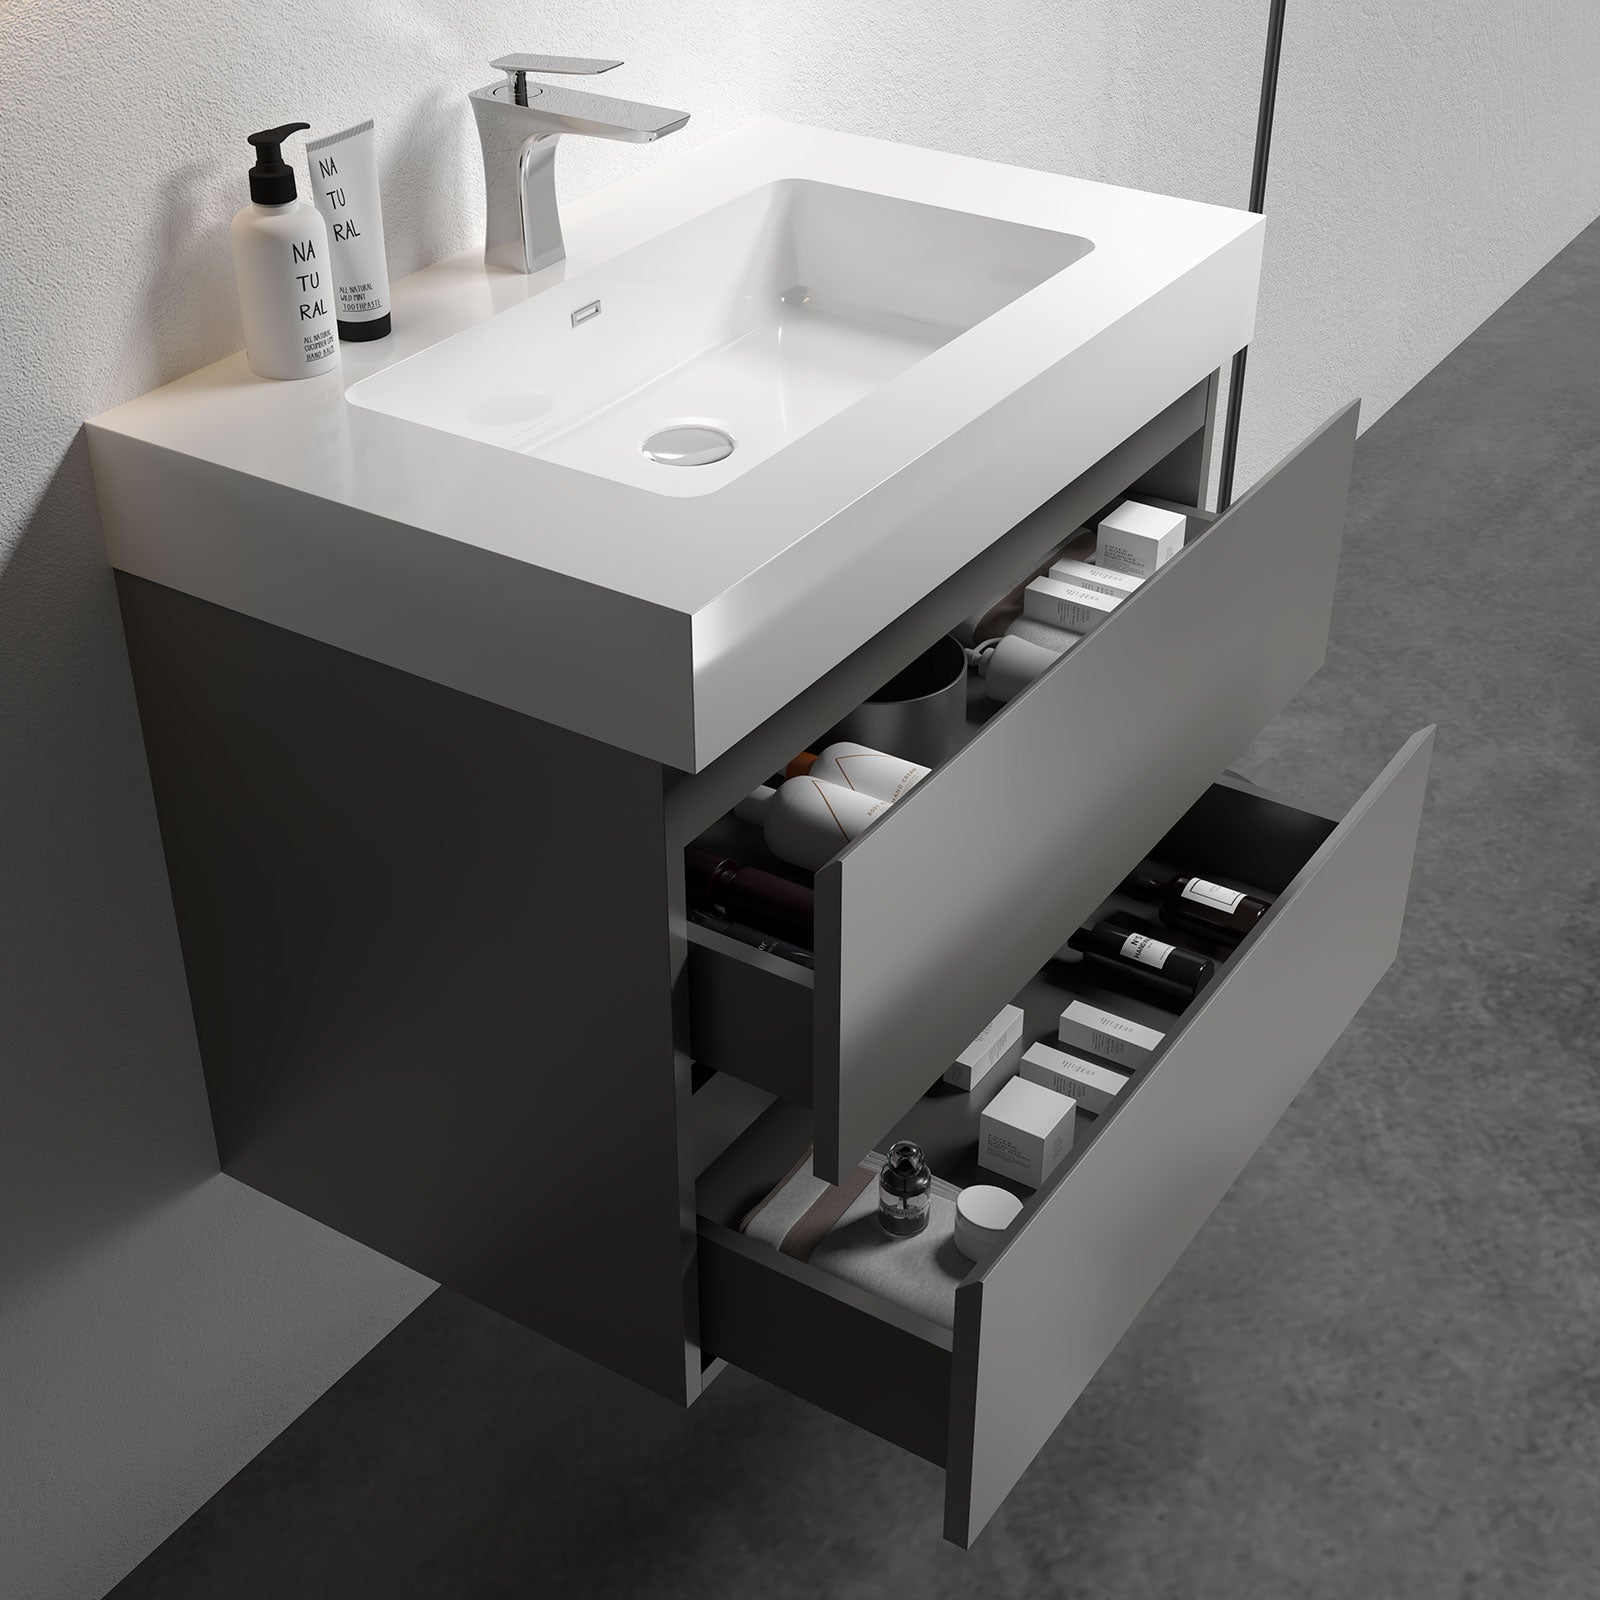 gray bathroom vanity with double drawers